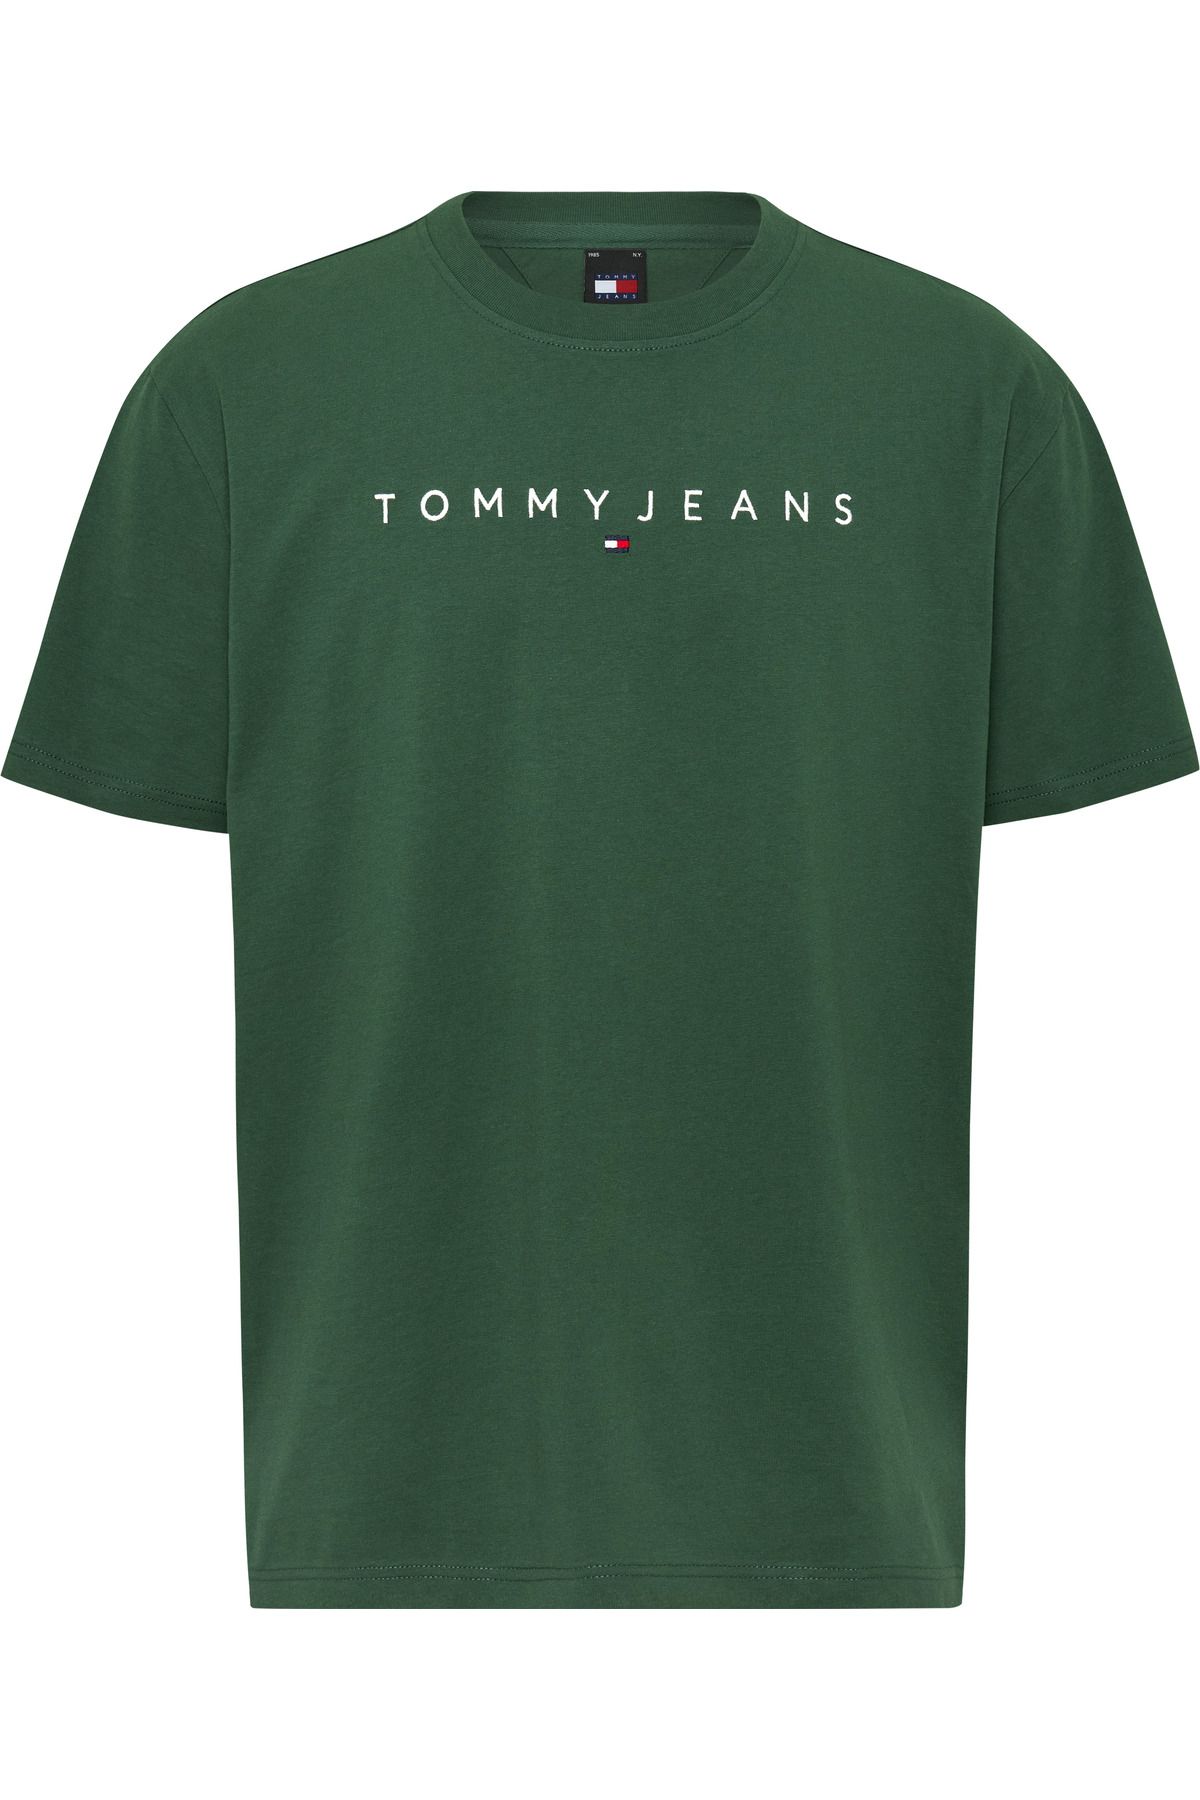 Tommy Hilfiger Erkek Marka Logolu Günlük Kullanıma Uygun Yeşil T-Shirt Dm0dm17993-L4l